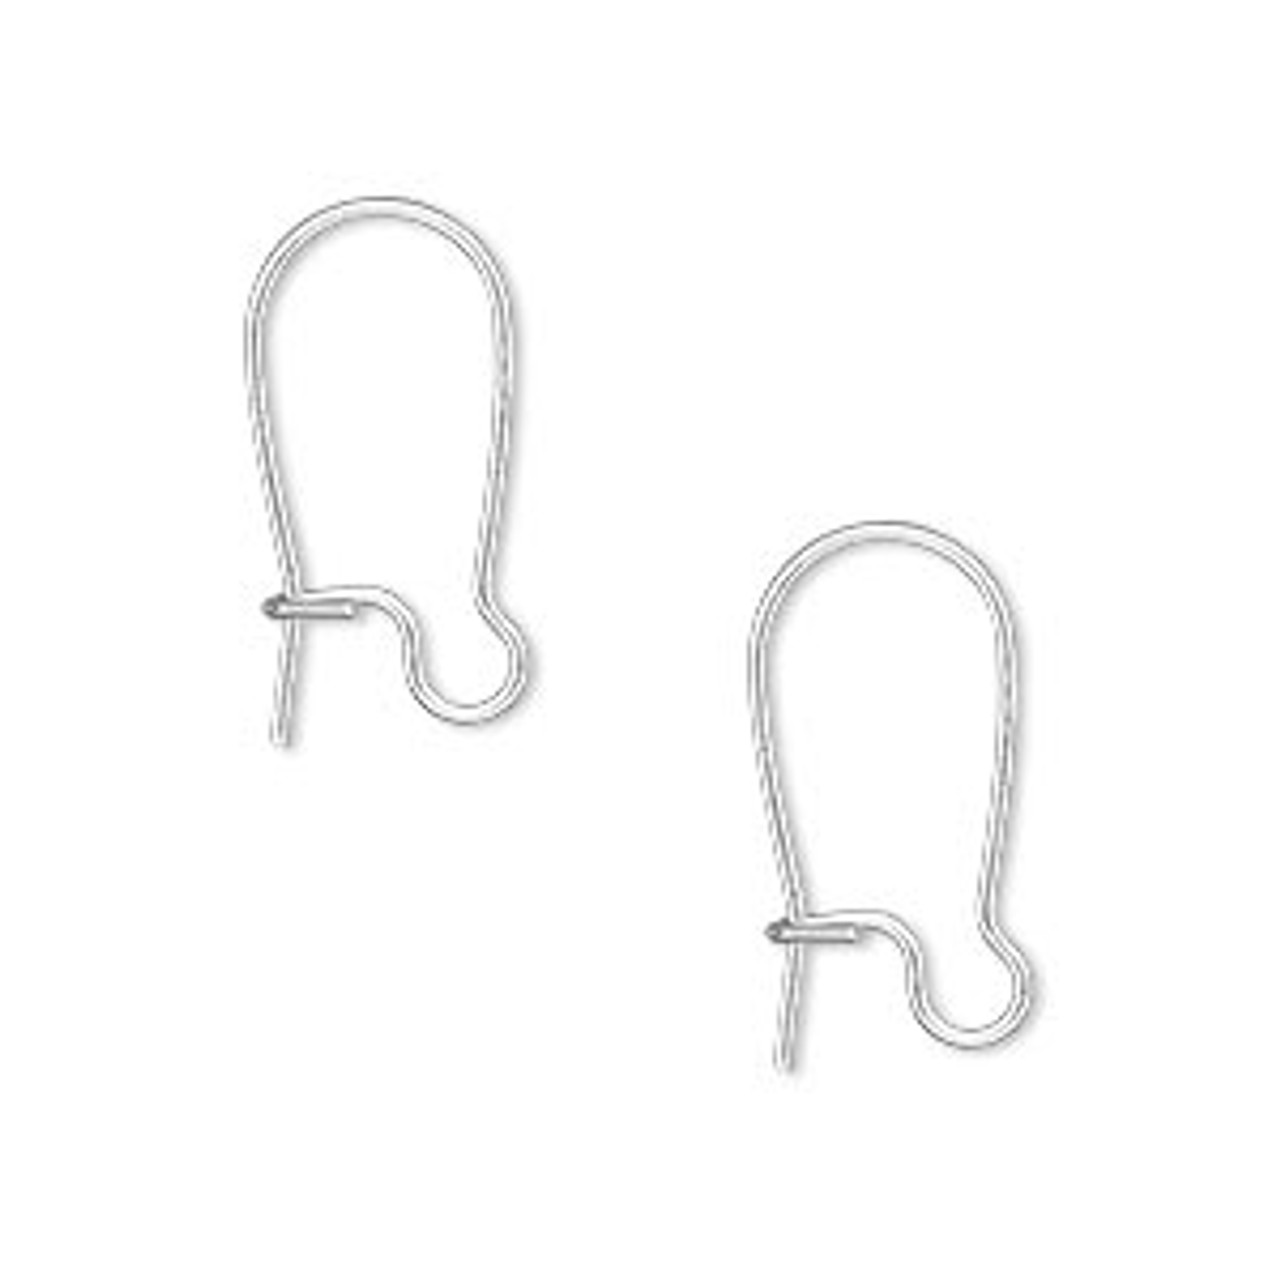 How to Make Endlessly Interchangeable Earrings using Kidney Earring Hooks -  YouTube